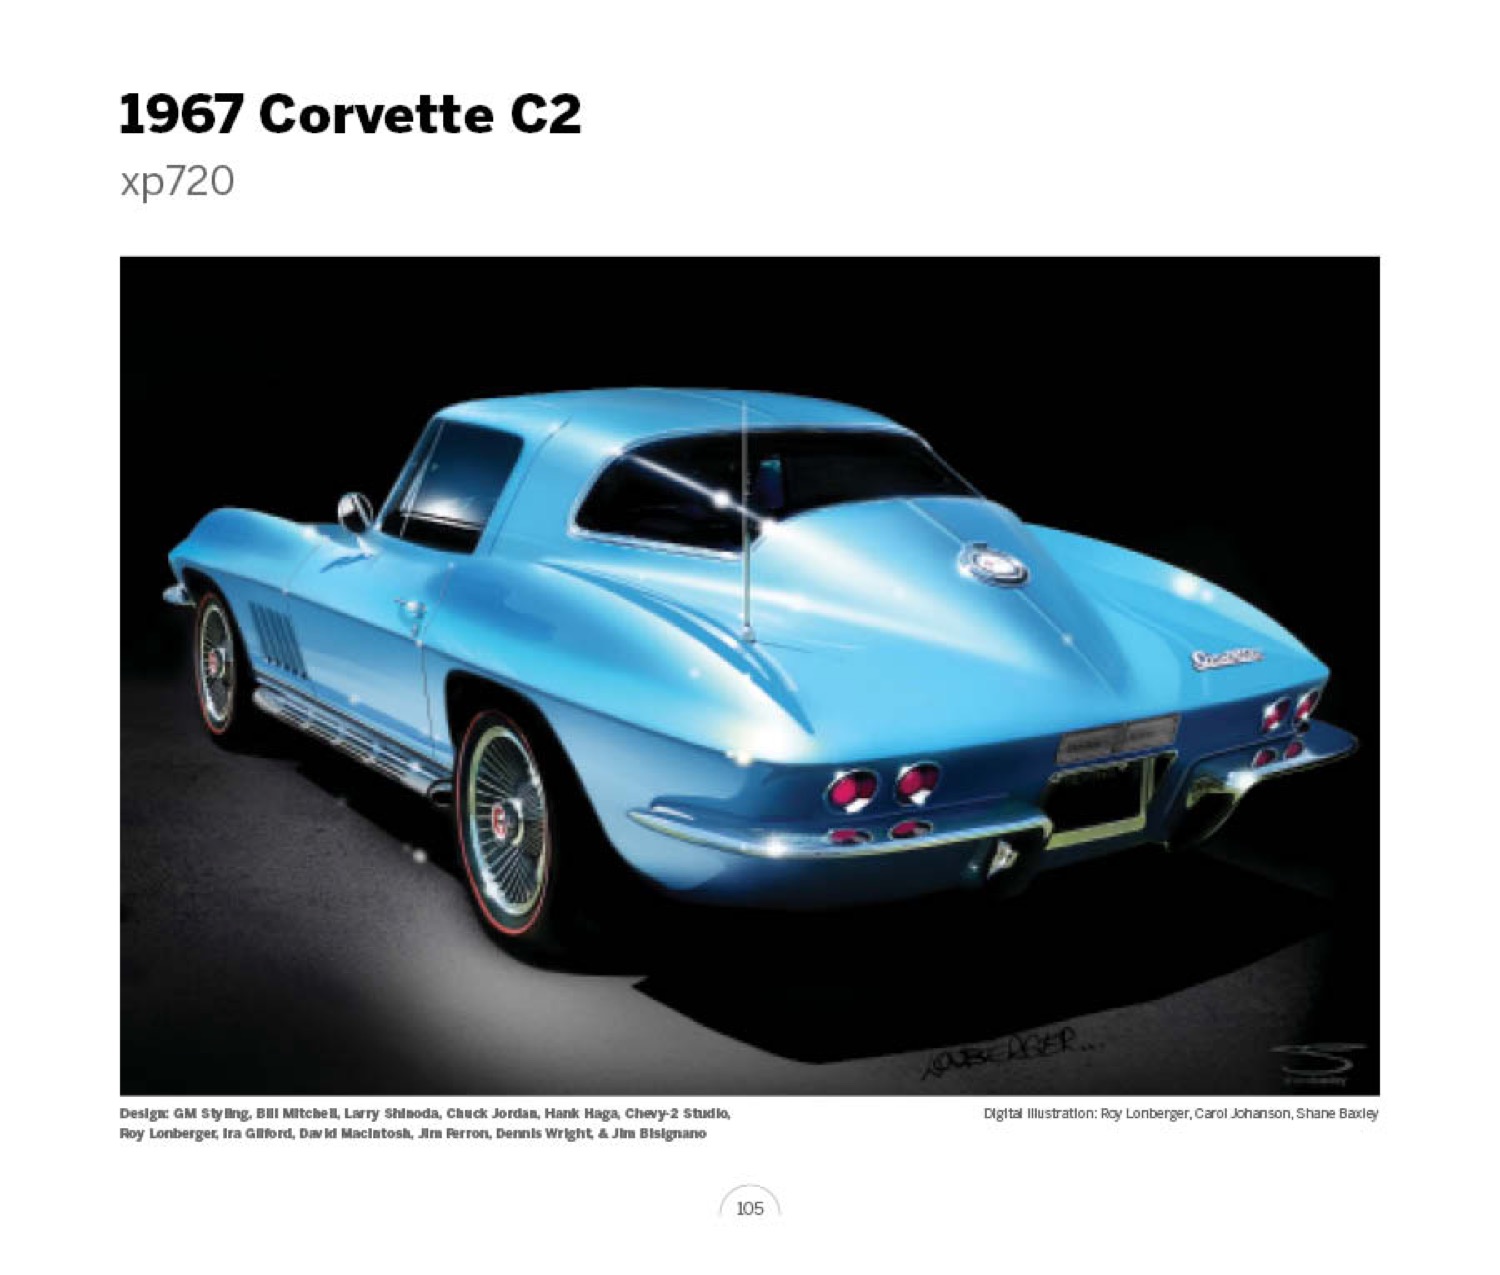 (06) 1967 Corvette C2    Sting Ray xp720 LoRez.jpg